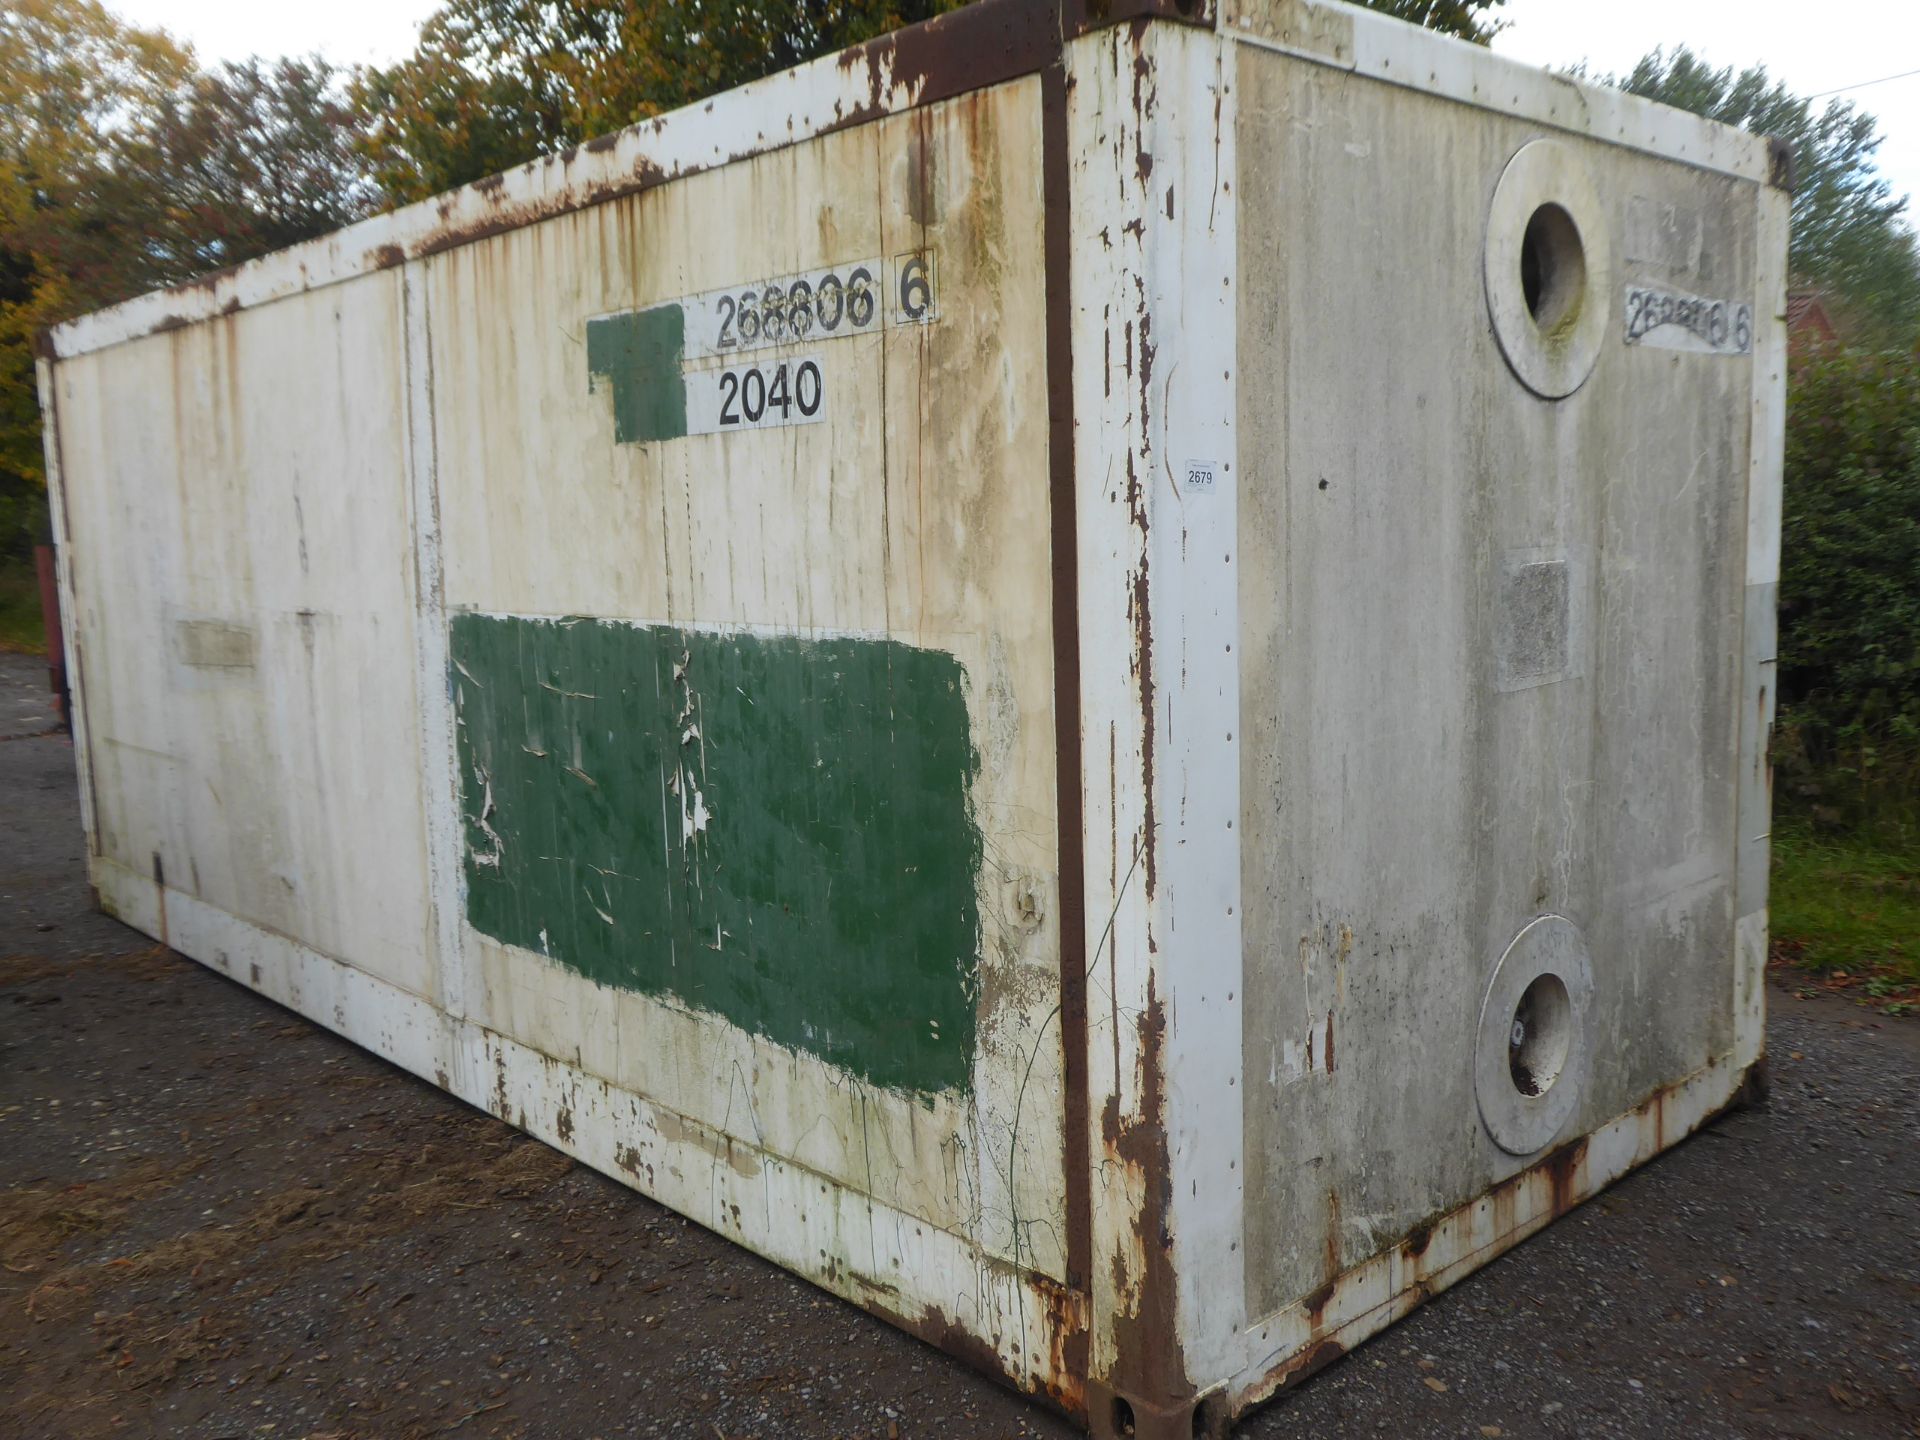 20'x8' shipping container with aluminium floor